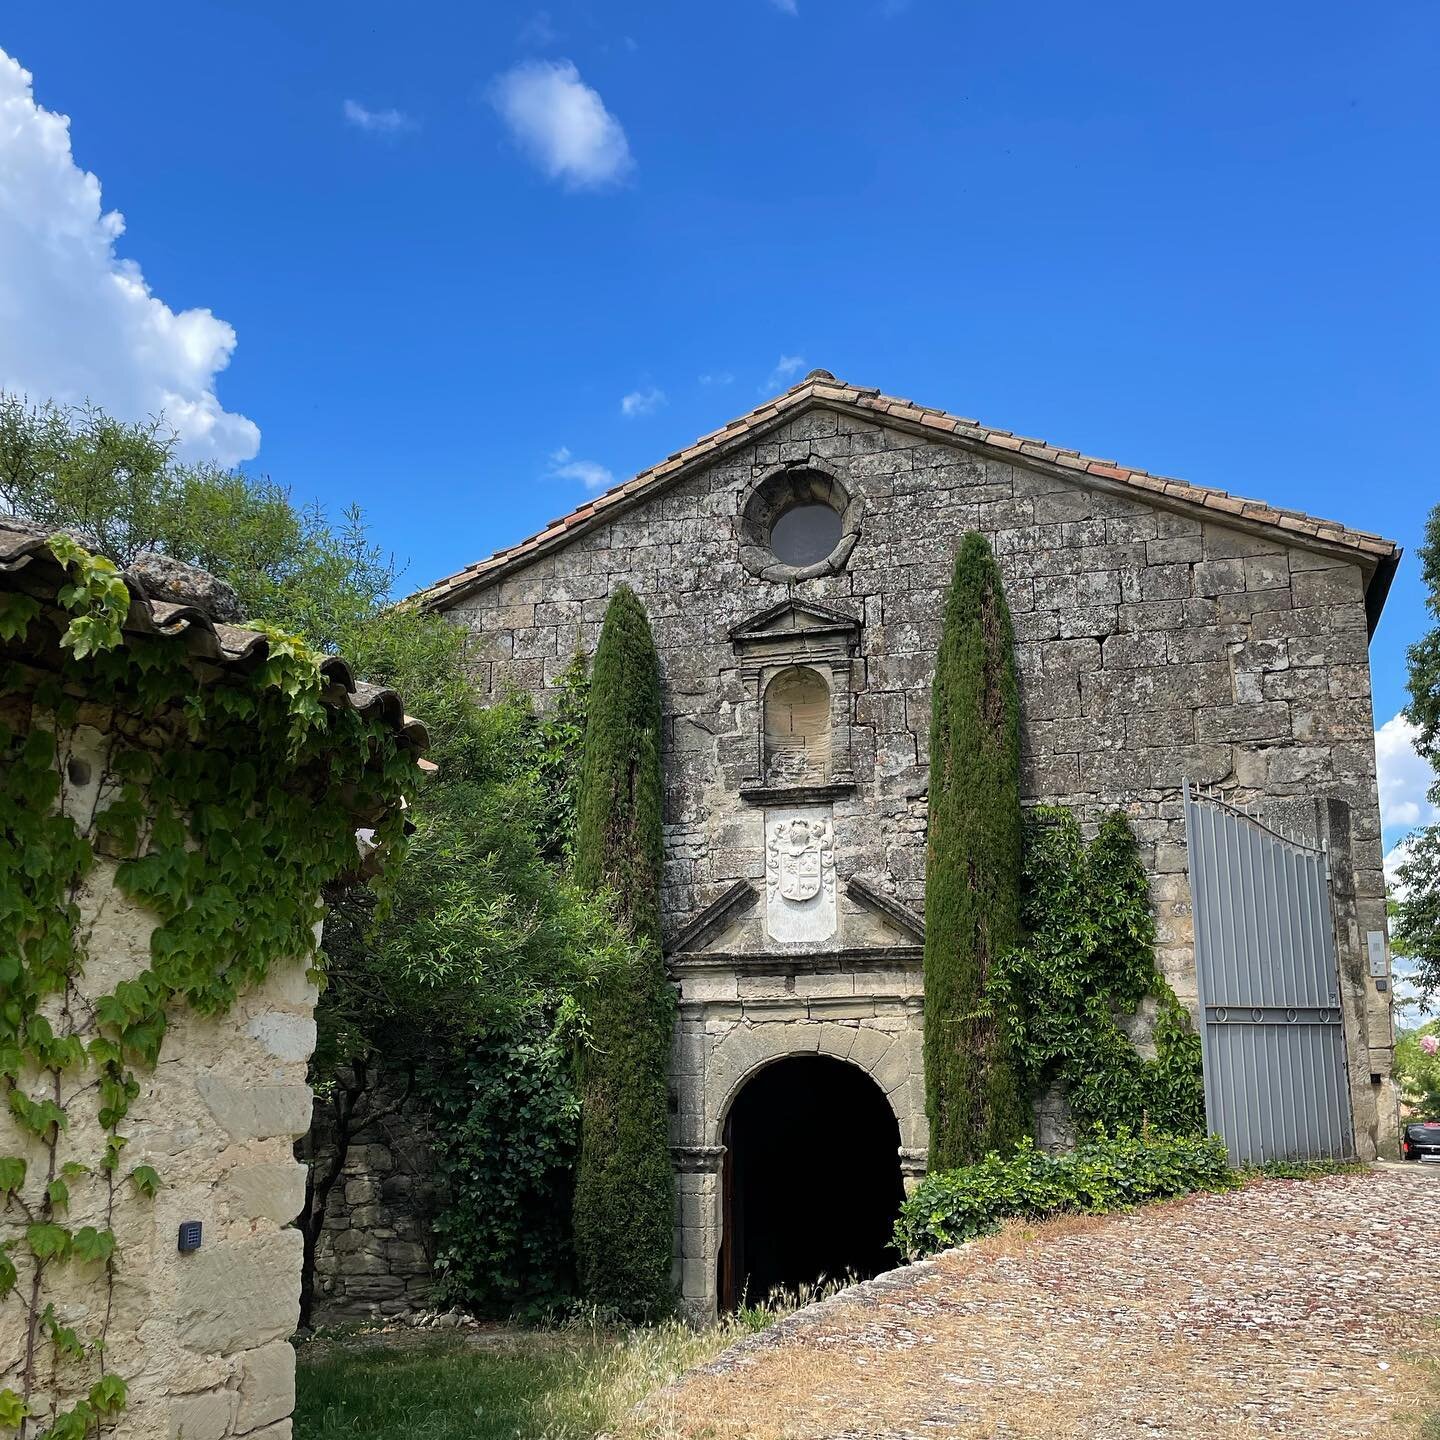 Provence. June, 2021. #bonnieux #abbayedesenanque #provence #summer